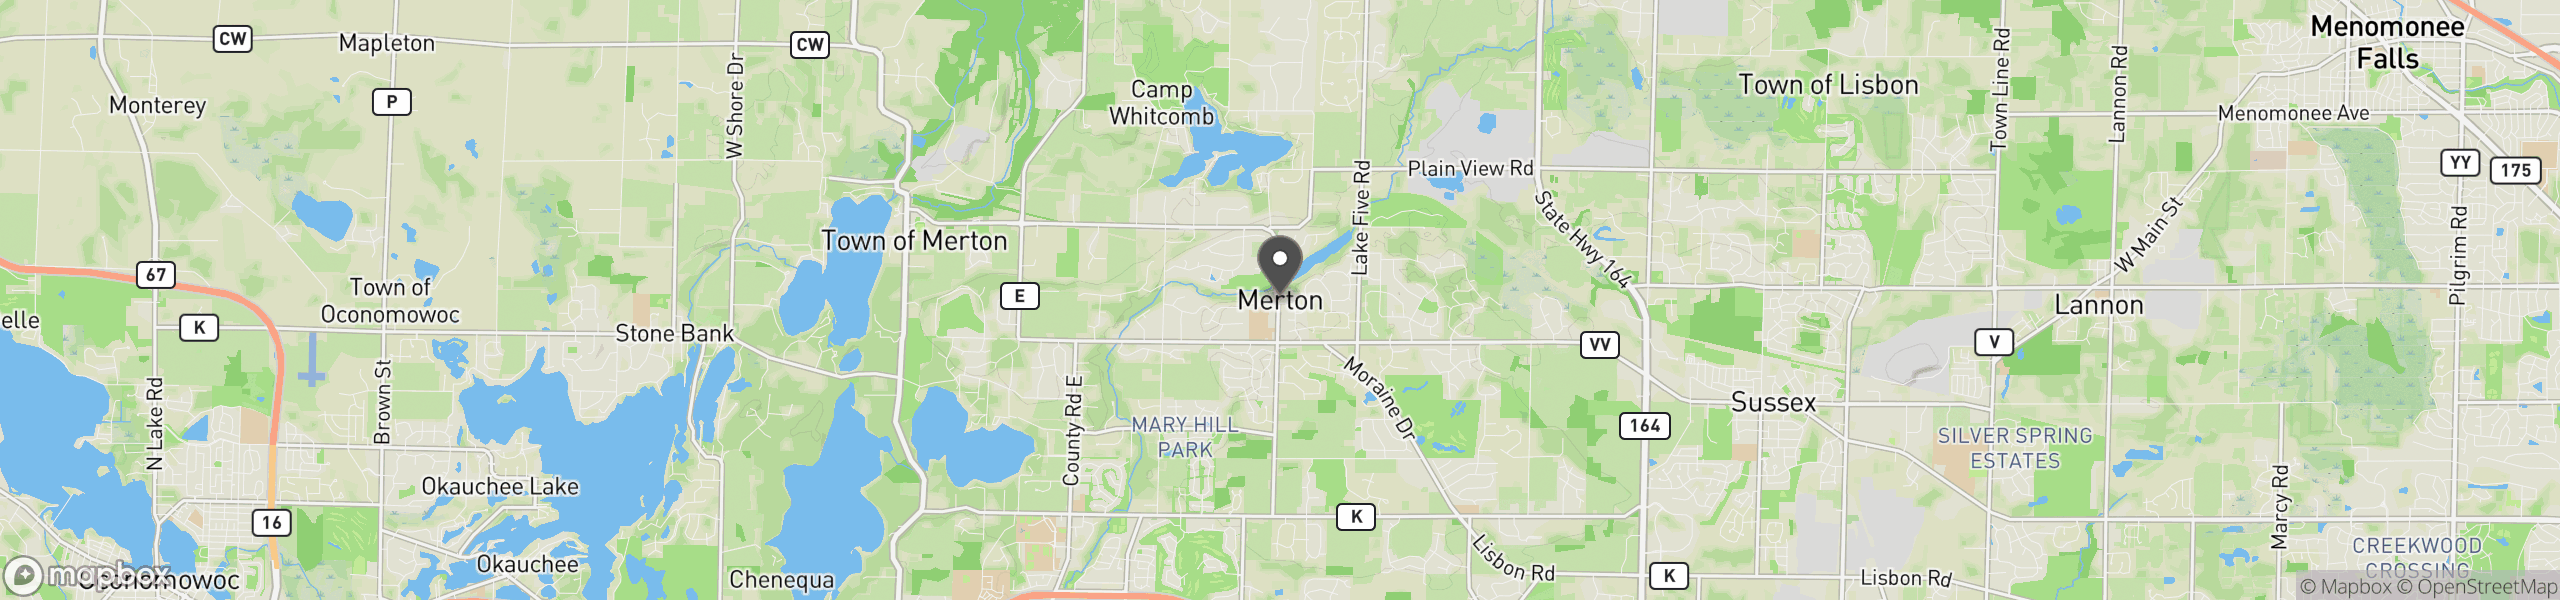 Merton, WI 53056